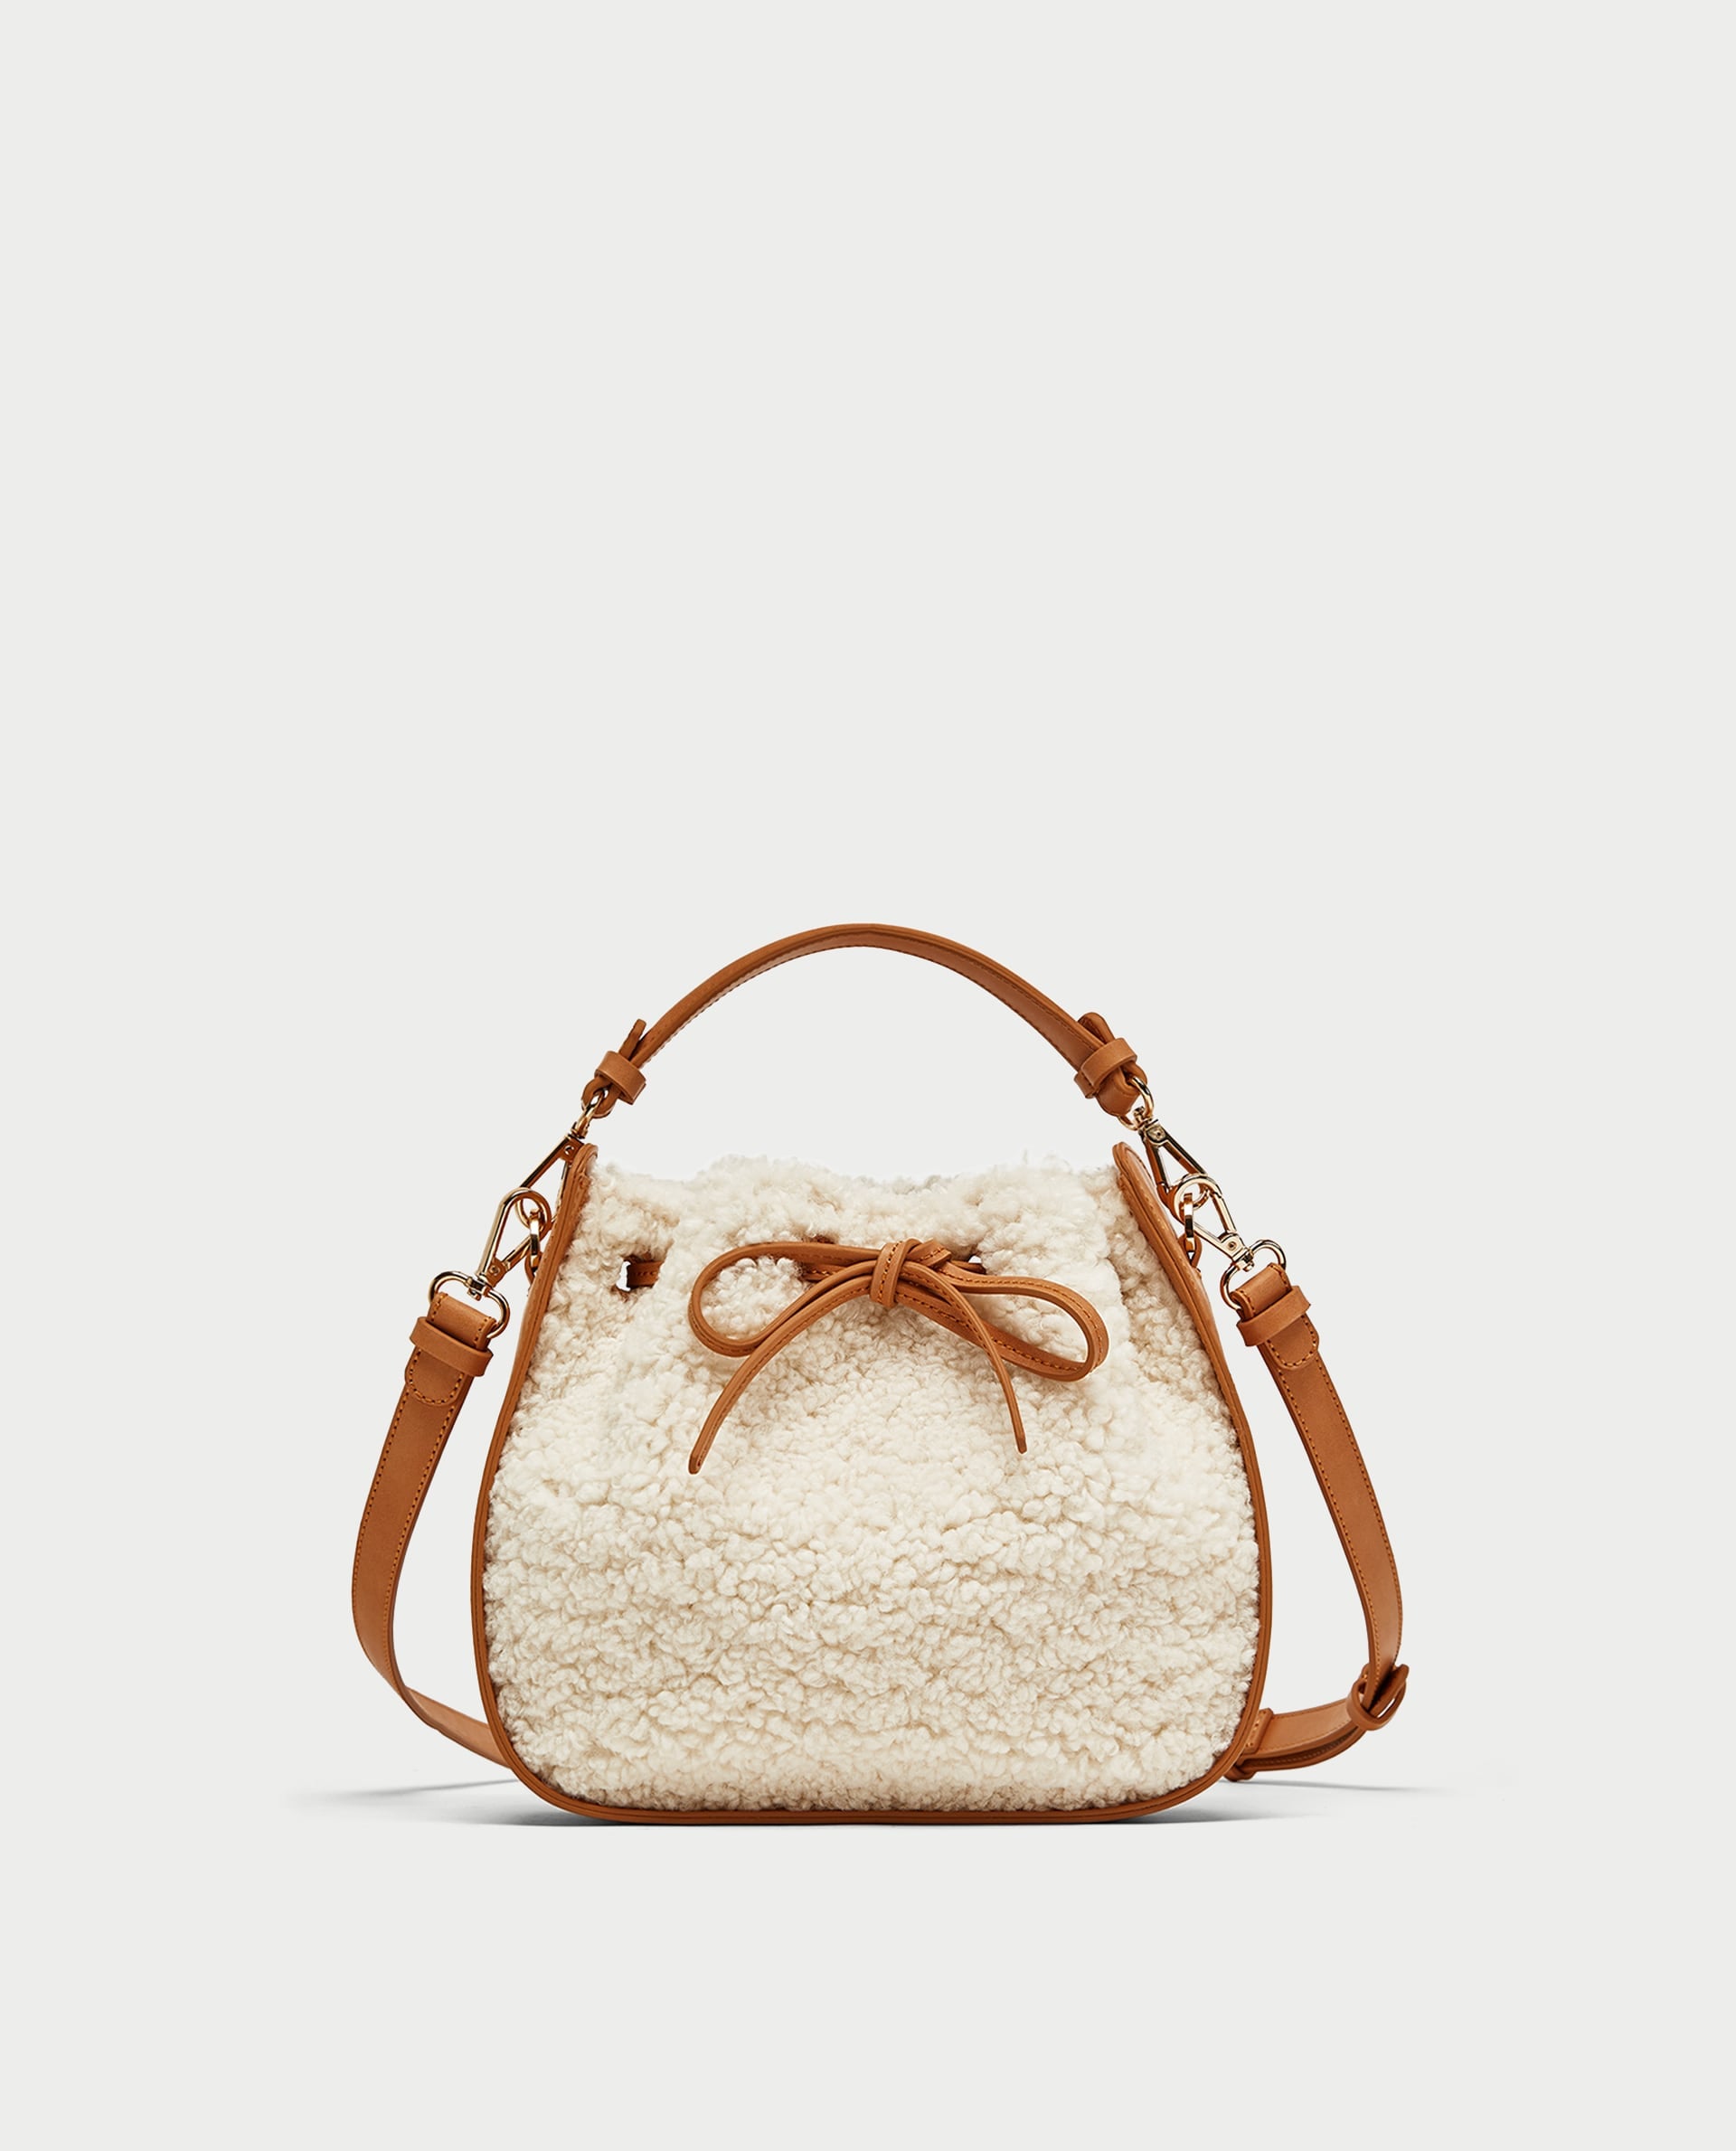 Zara bag | Handbags, Purses & Women's Bags for Sale | Gumtree